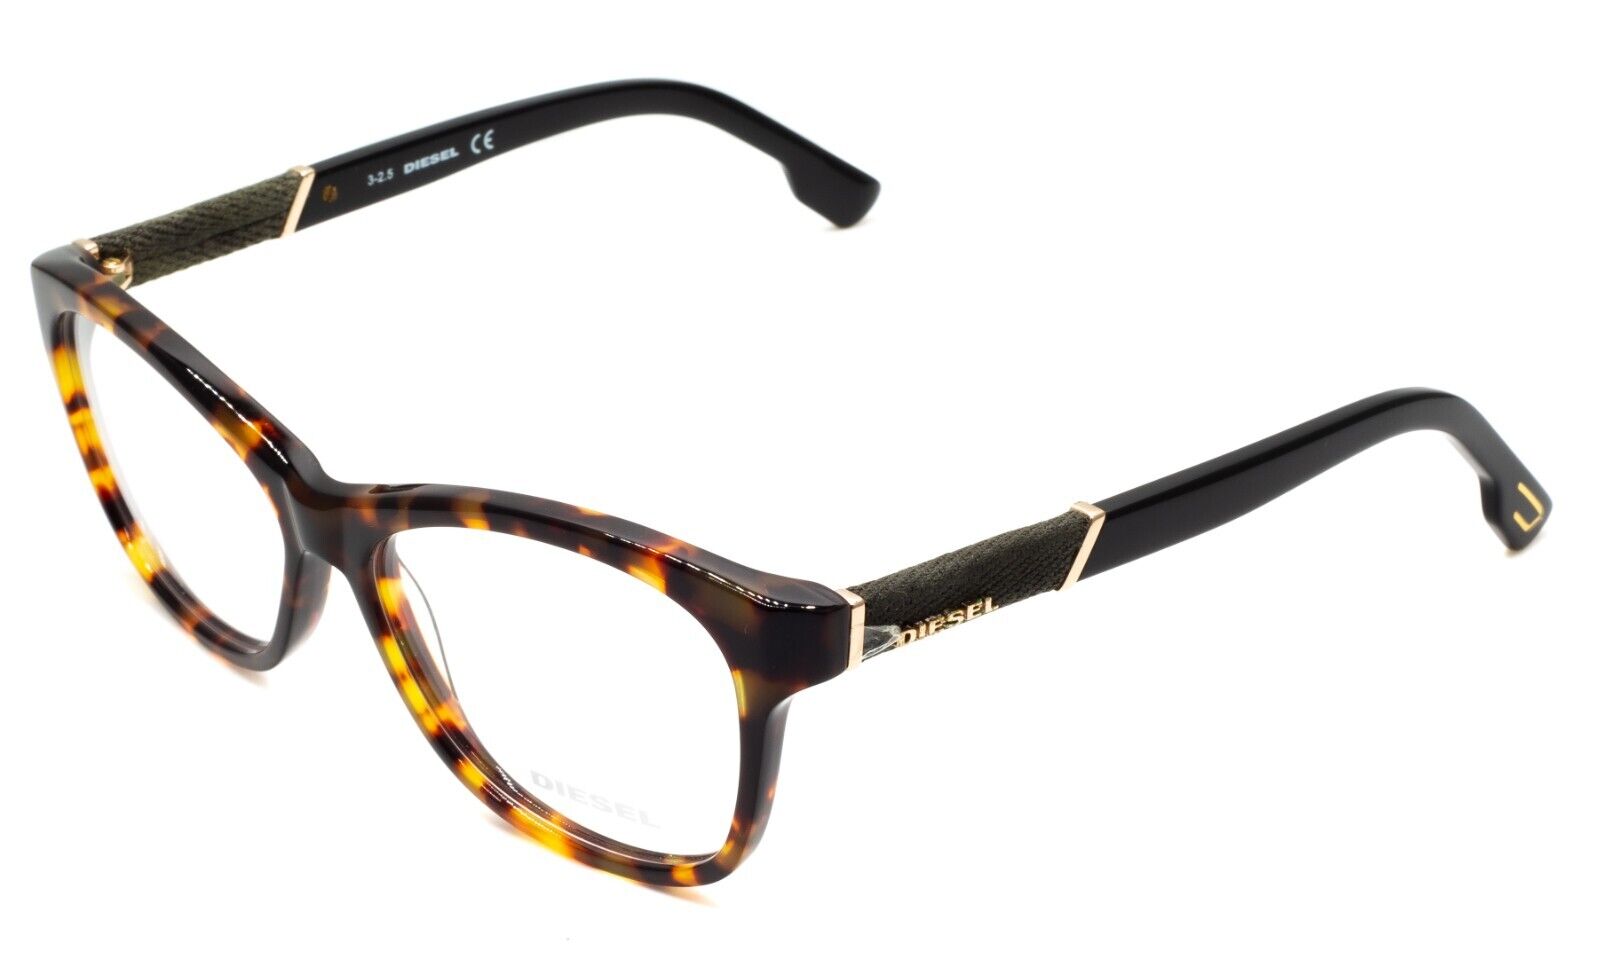 LEVI'S LV 5027 086 56mm Glasses RX Optical Eyewear Frames Eyeglasses - New  BNIB - GGV Eyewear